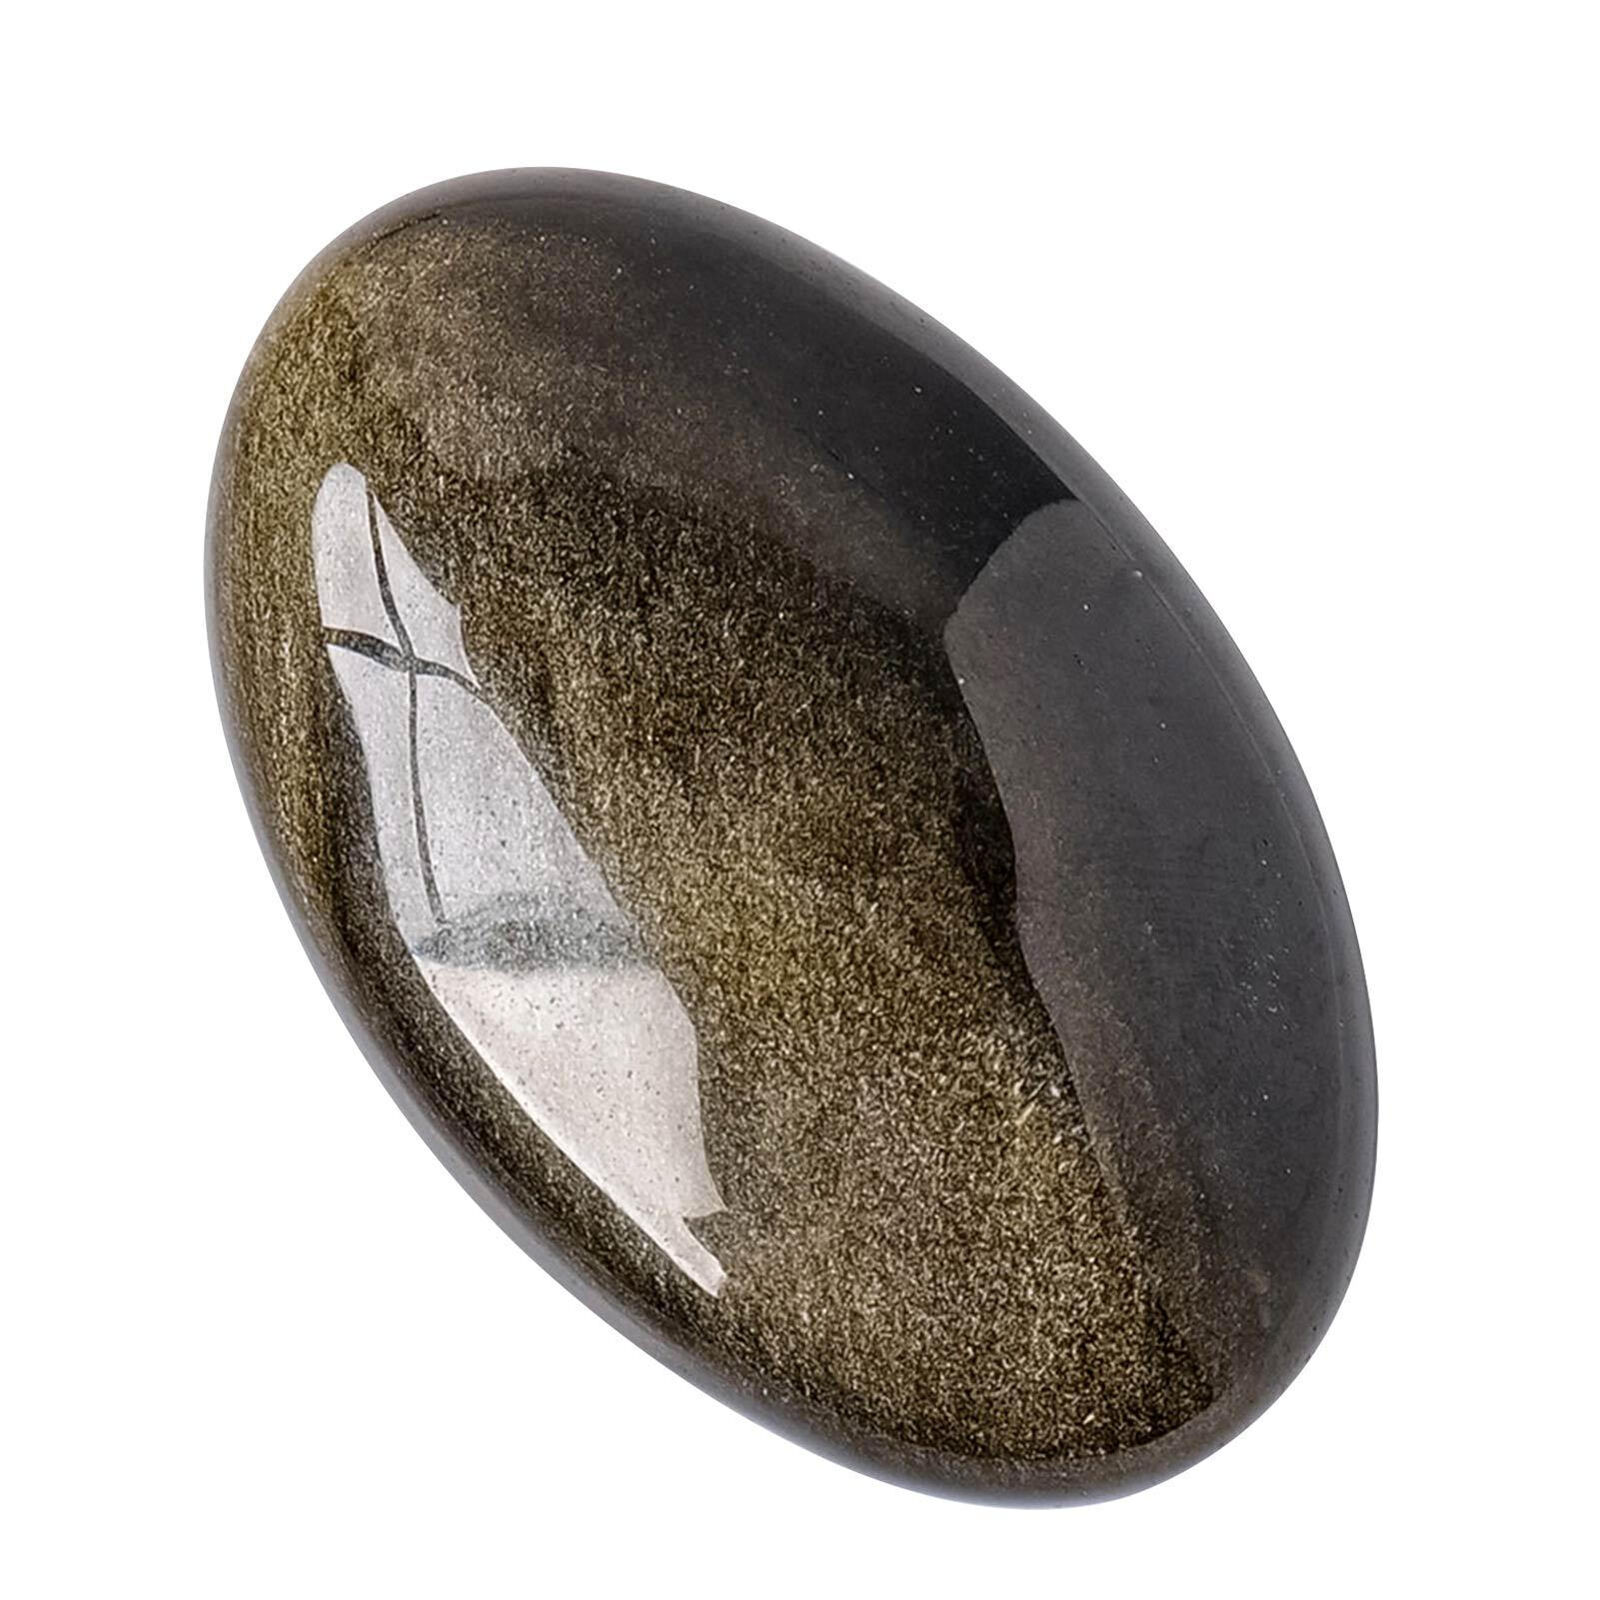 Black Obsidian Palm Worry Stone Crystal Smooth Polished Pocket Gemstone Gifts